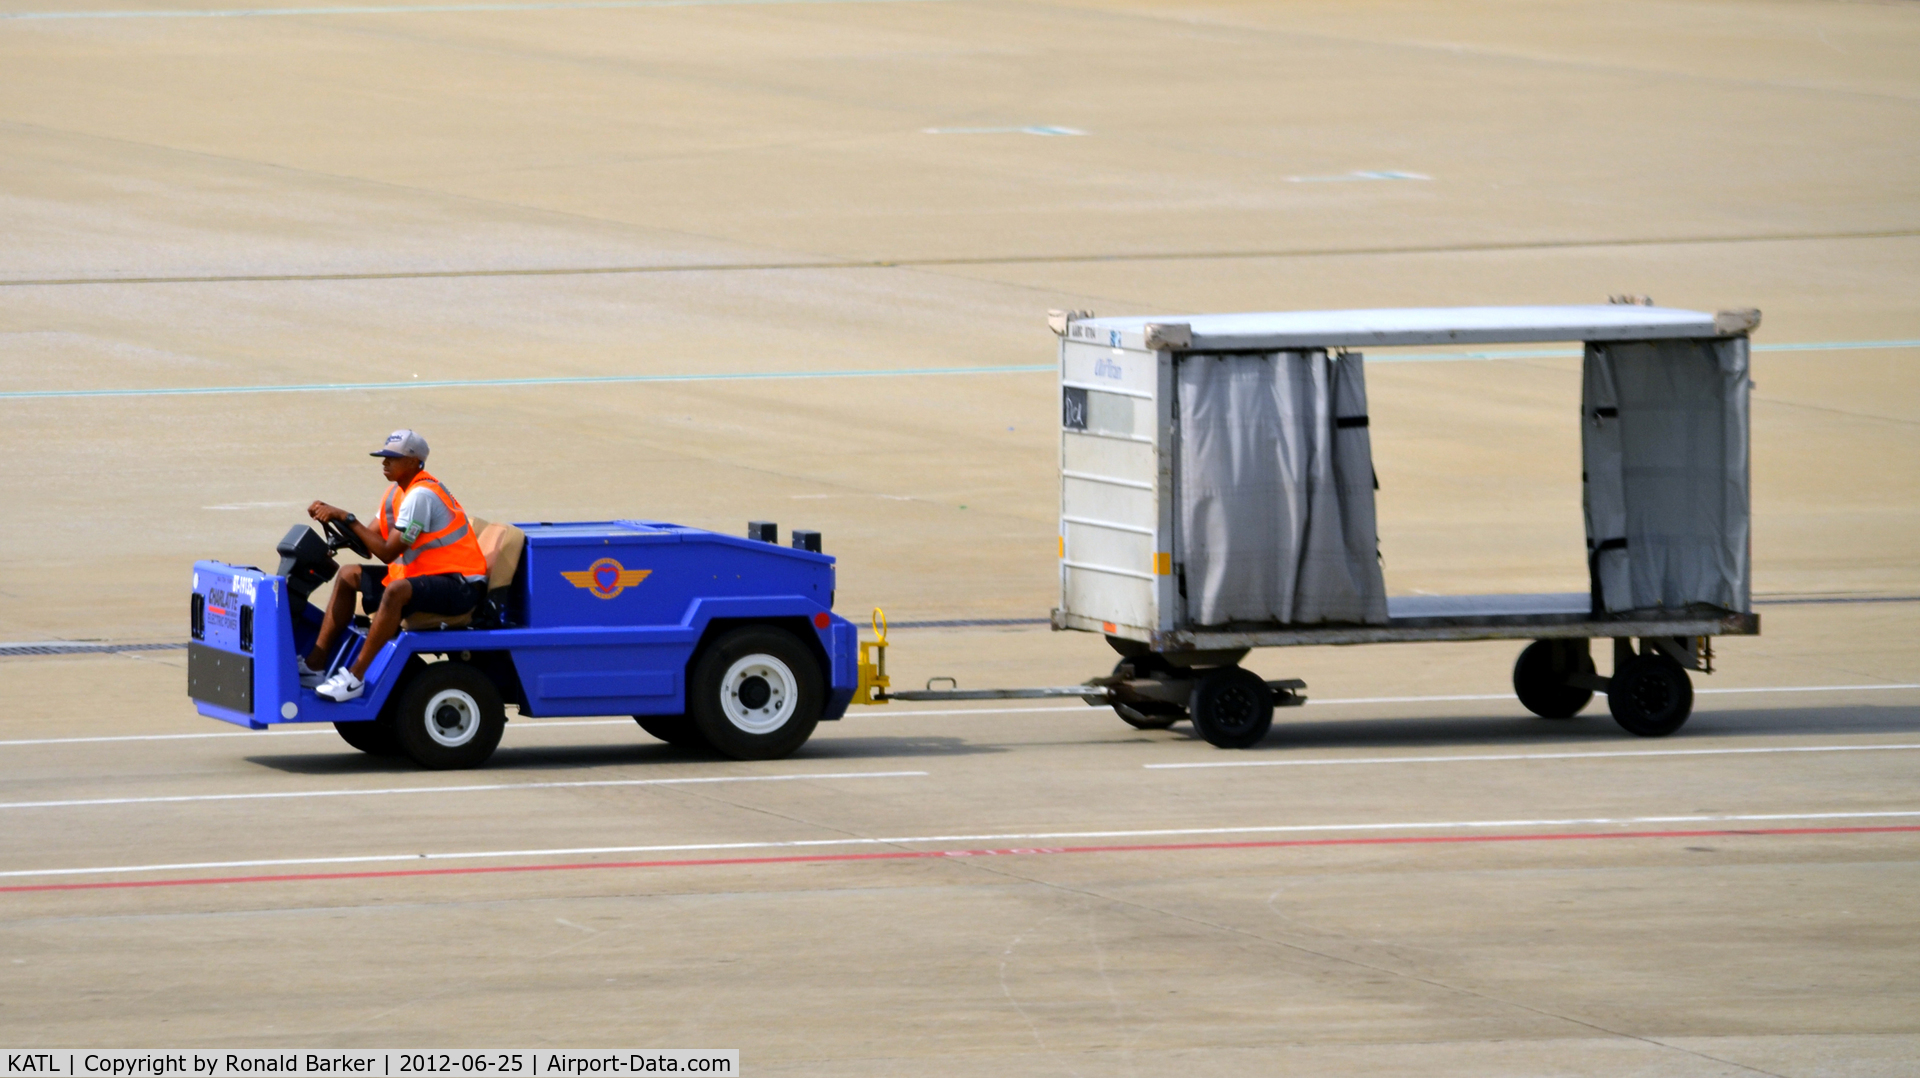 Hartsfield - Jackson Atlanta International Airport (ATL) - South West Tug and baggage cart